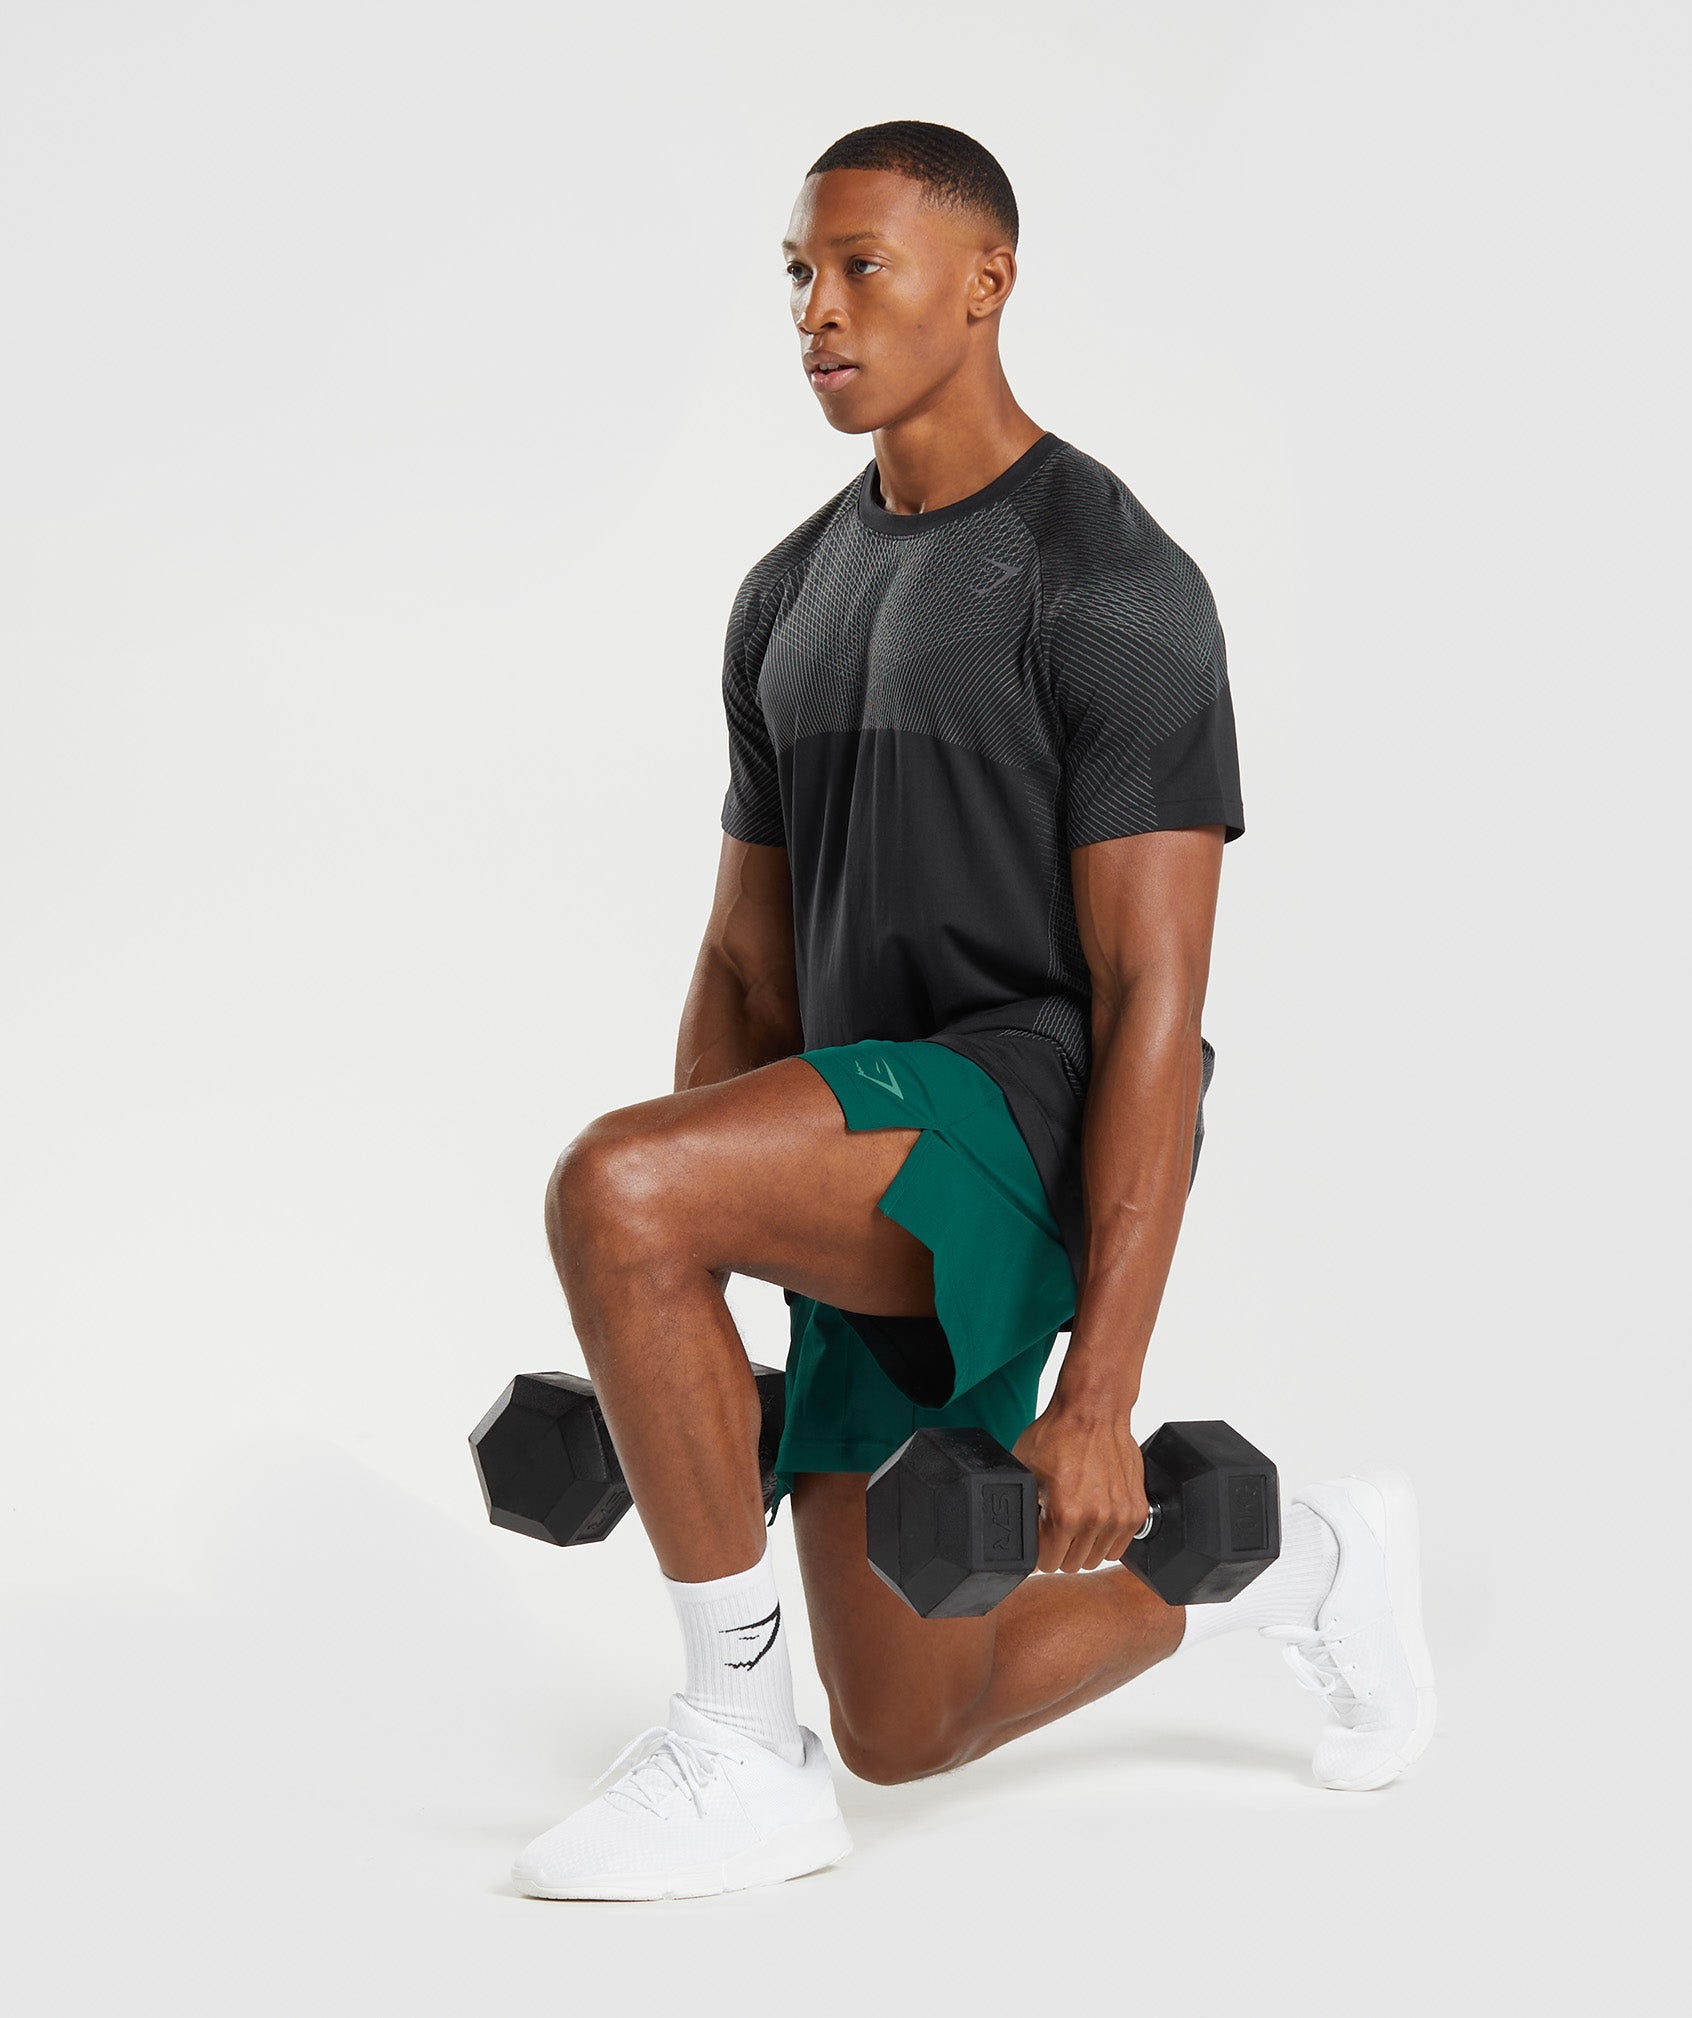 Gymshark Apex Shorts Black Lime Green Spandex Stretchy